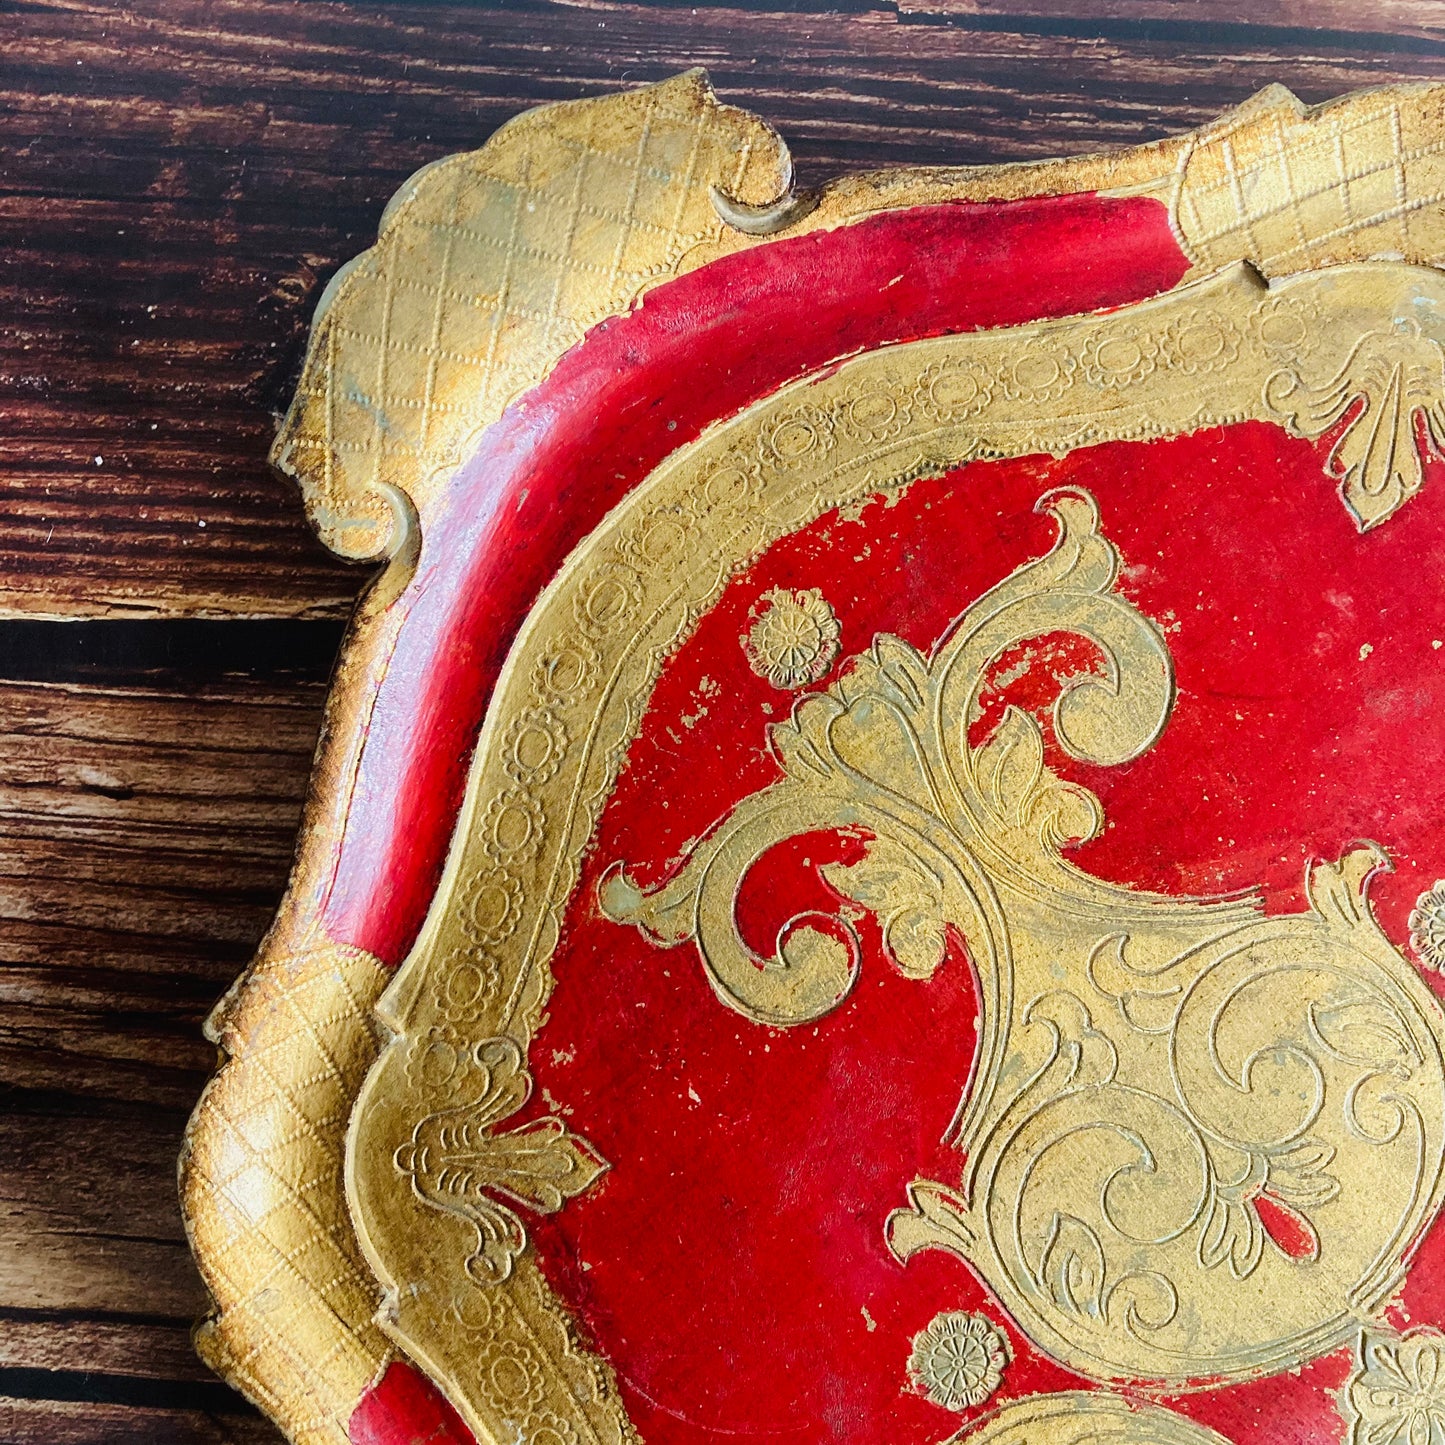 Vintage Florentine Paper Mache Tray | Red & Gold Decorative Italian Tray